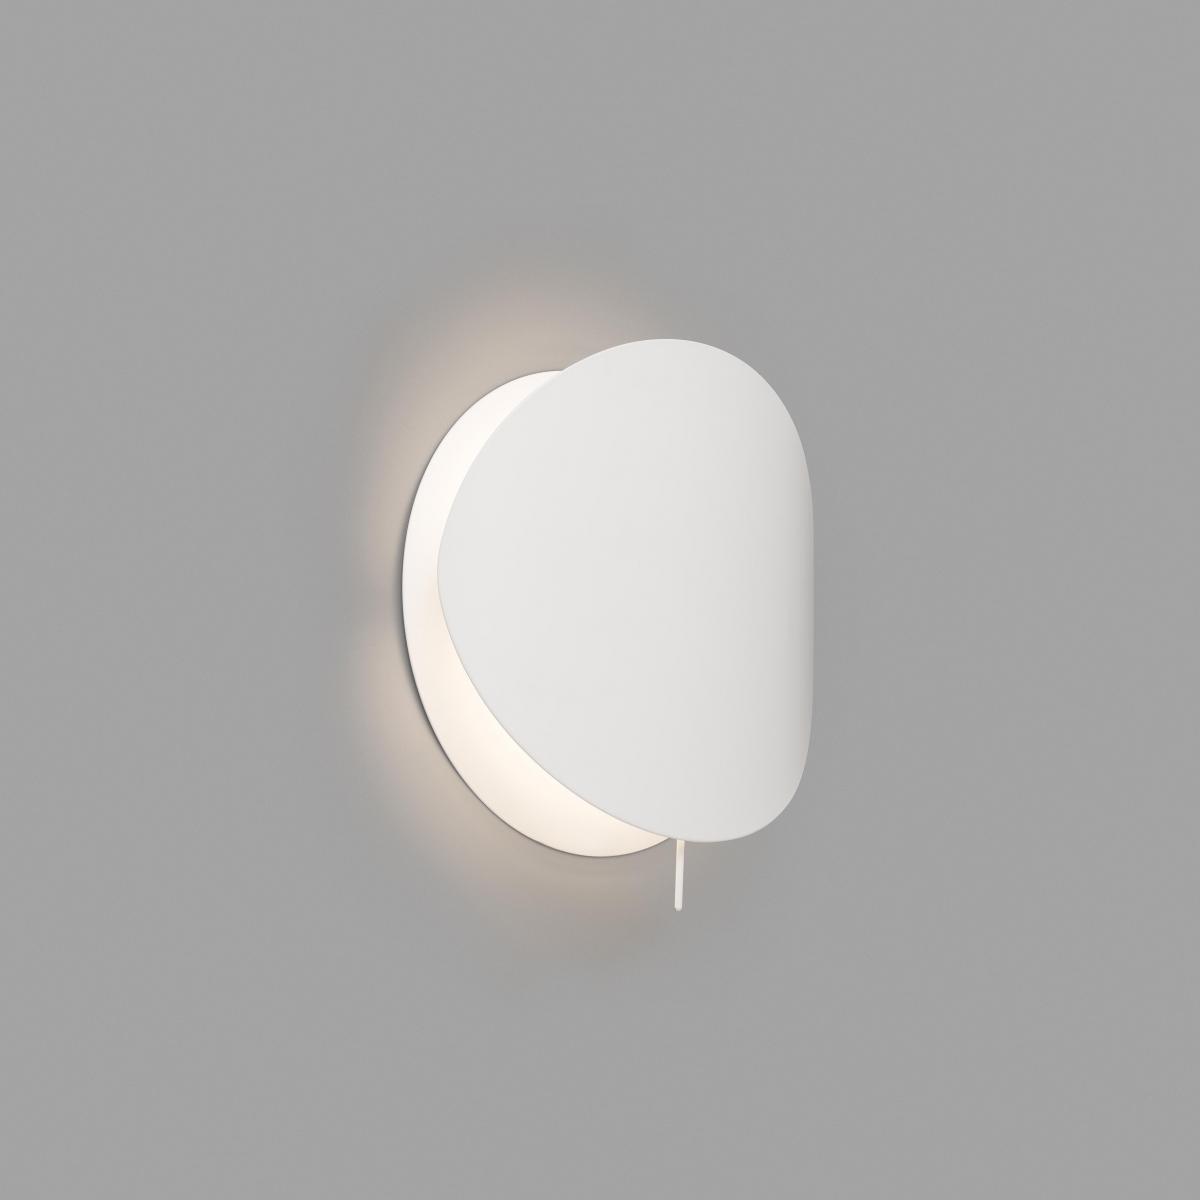 Faro Бра OVO-P белое матовое лампа R7s 78 мм